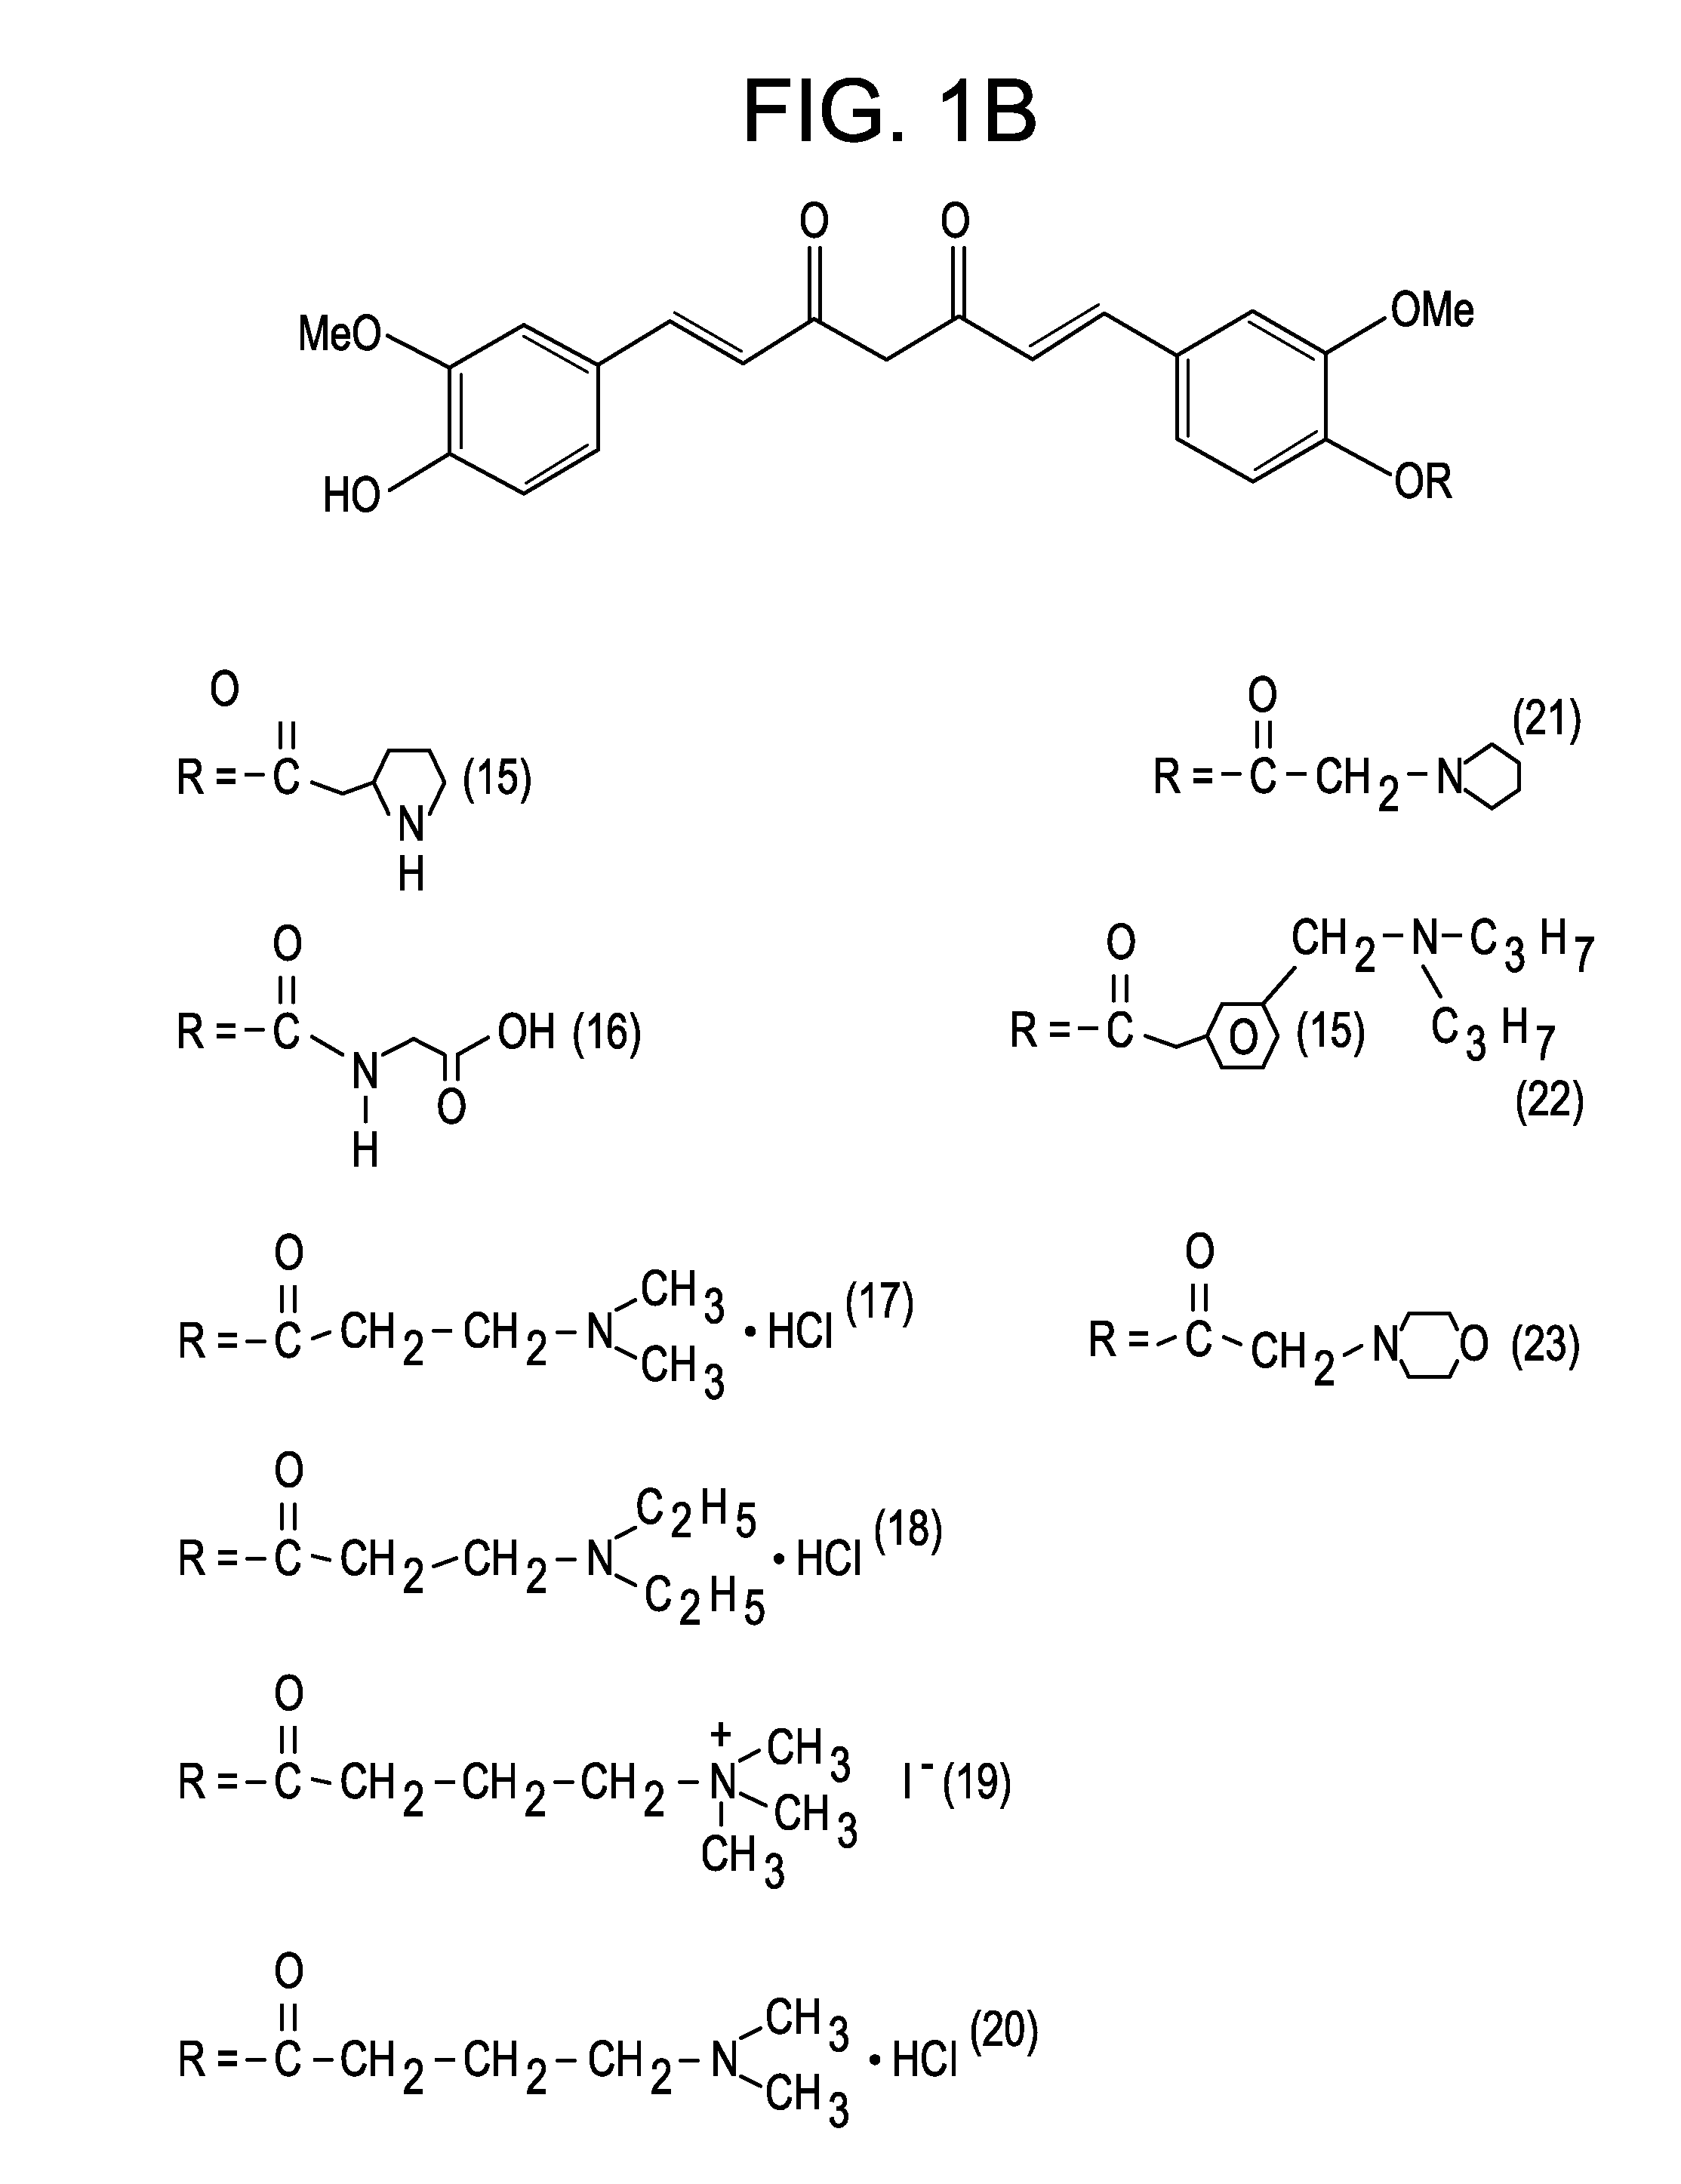 Methylene blue - curcumin analog for the treatment of alzheimer's disease